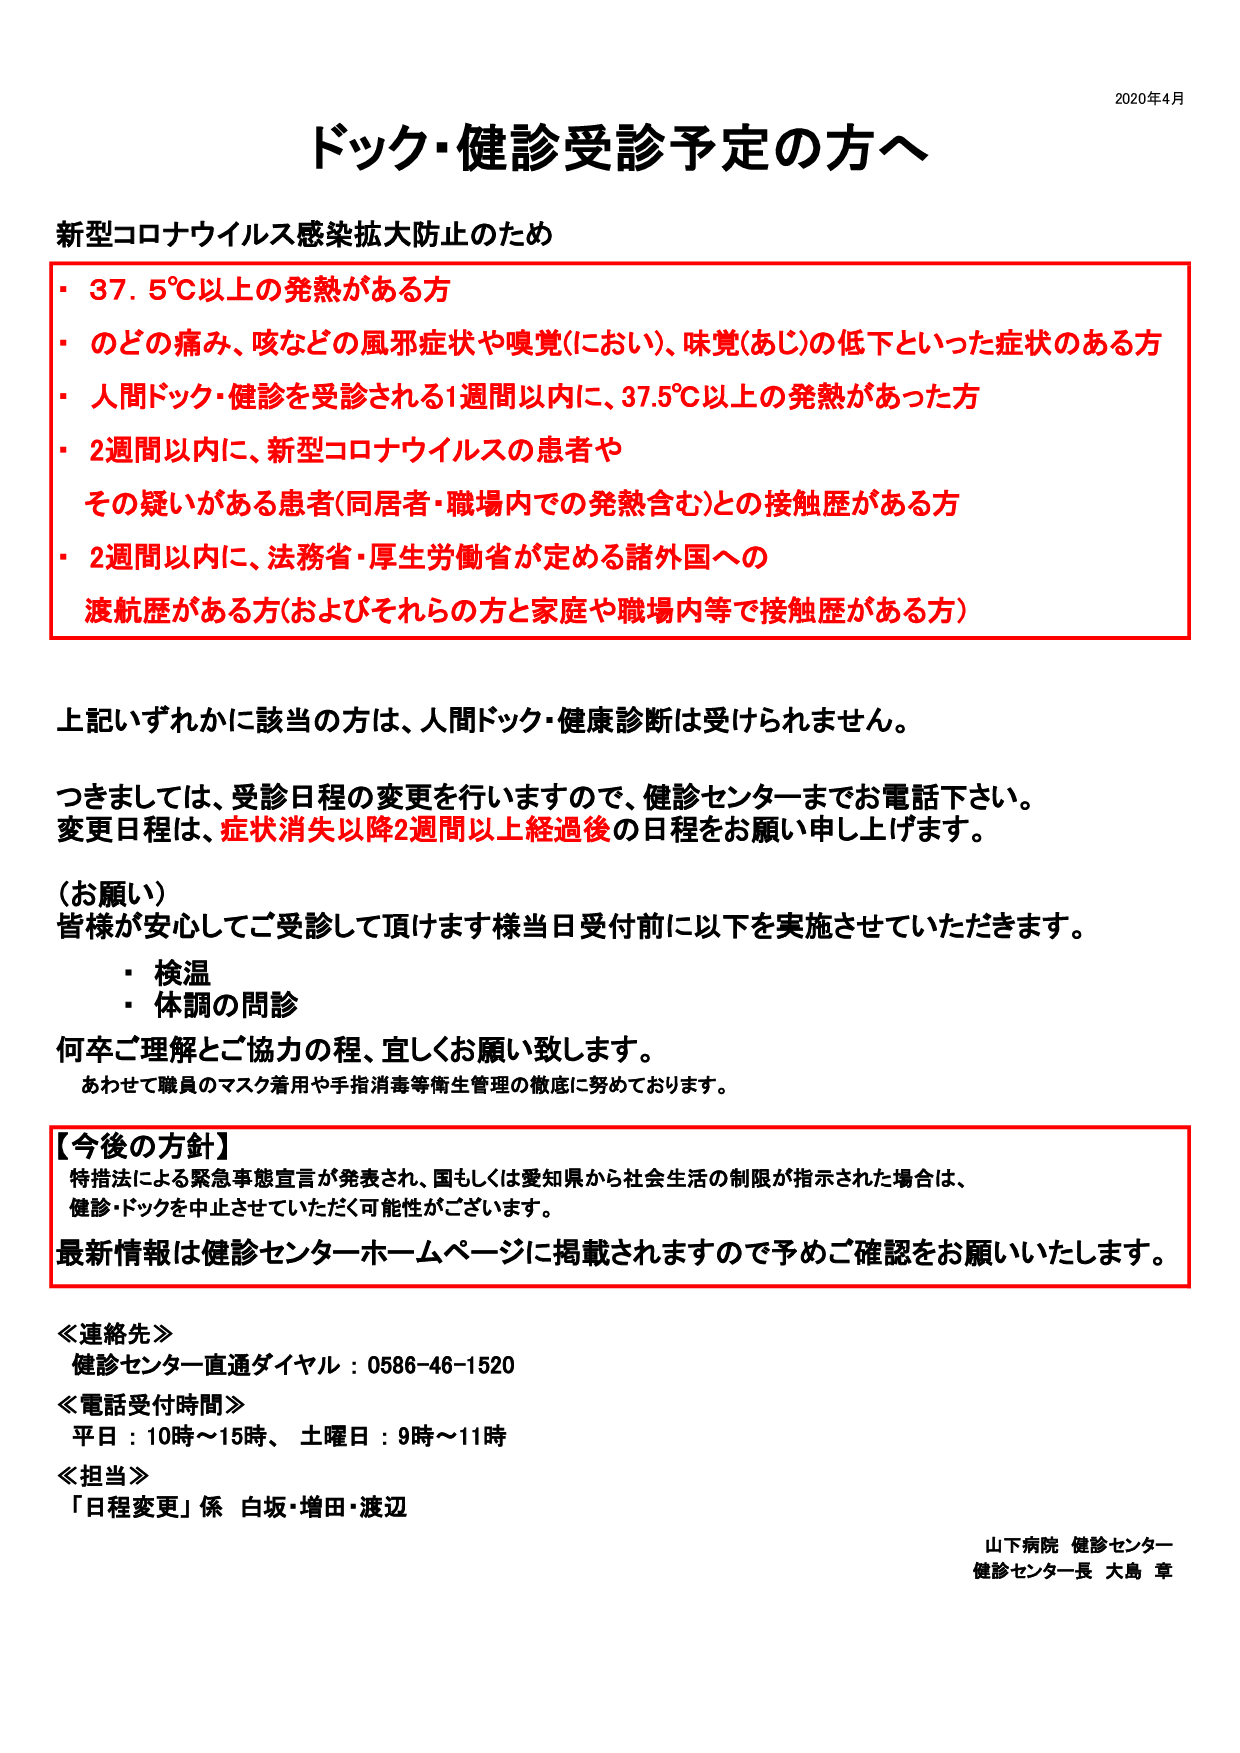 愛知 県 新型 コロナ 最新 情報